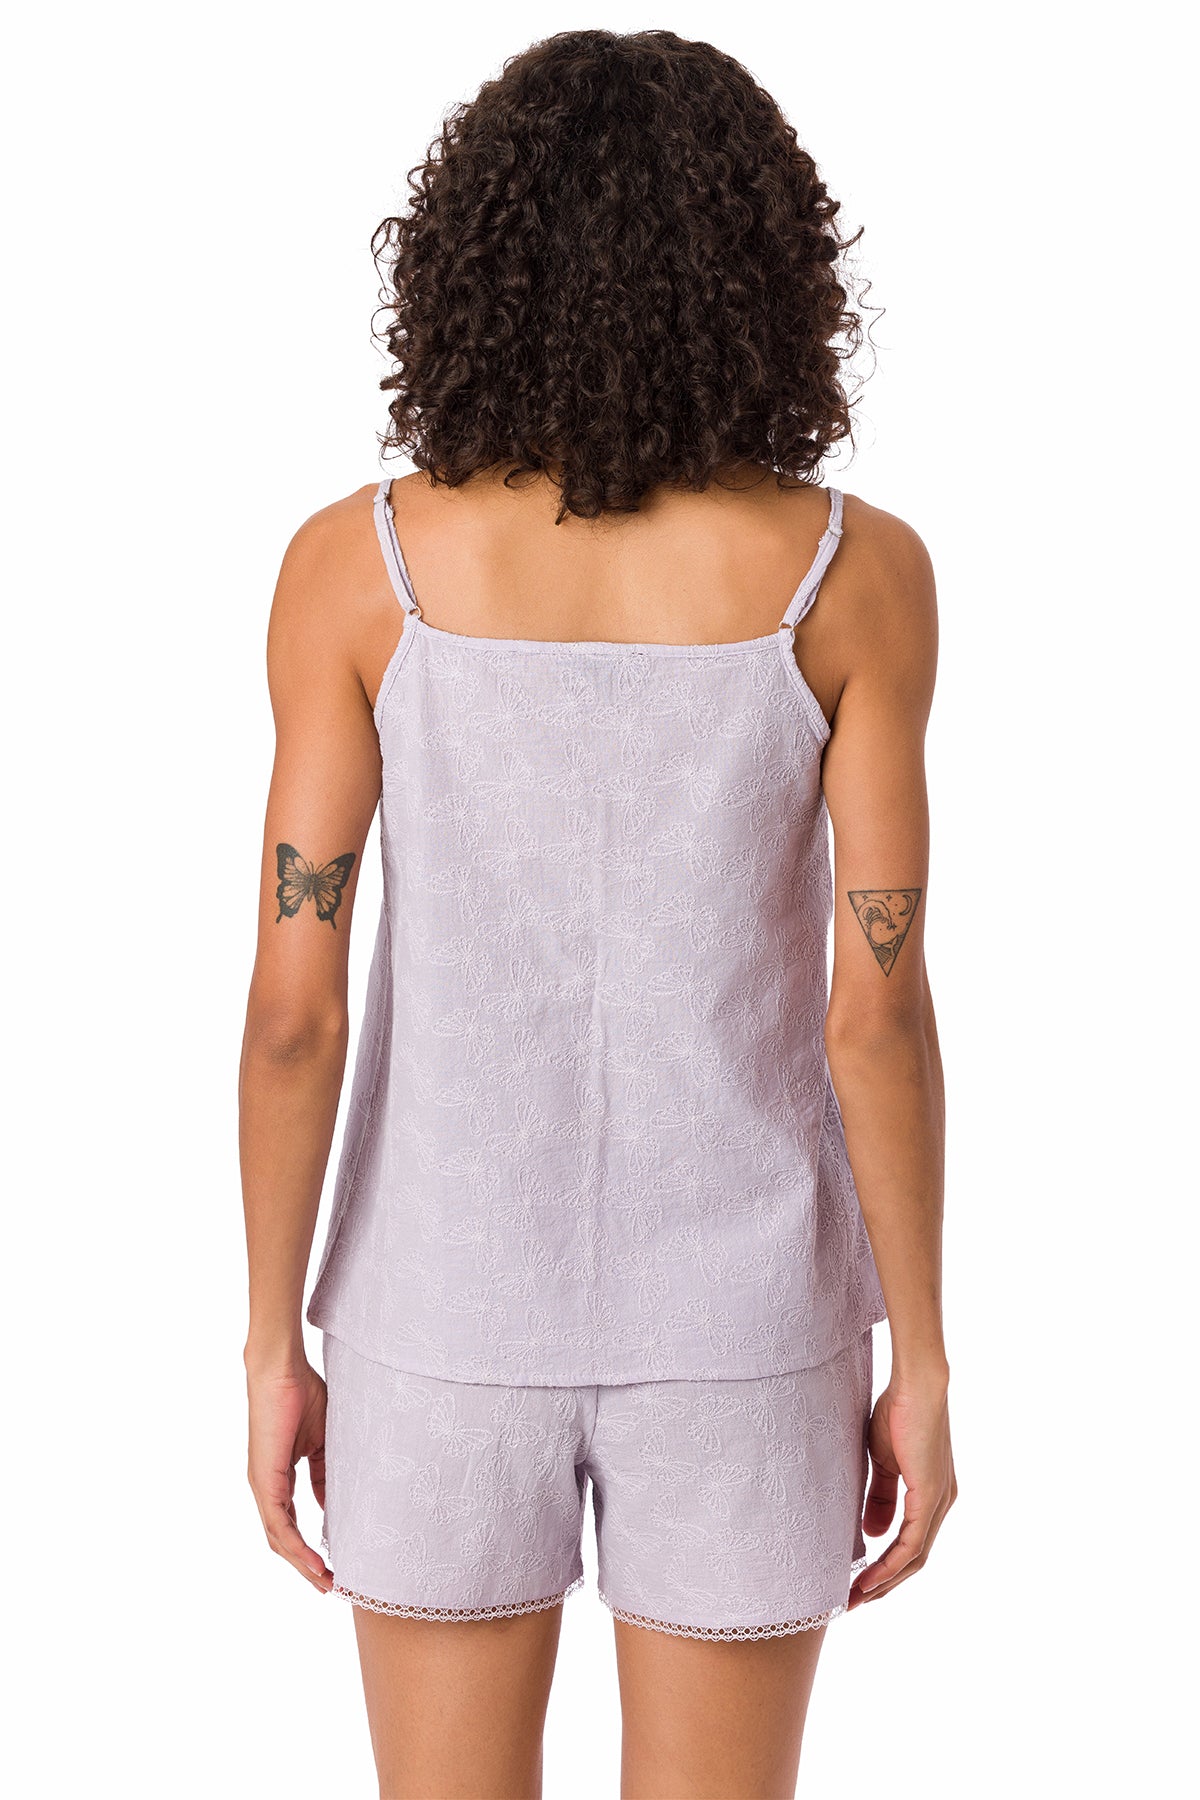 Suvi NYC women's 3-piece short-pants and jacket pajama set . Terry Cotton